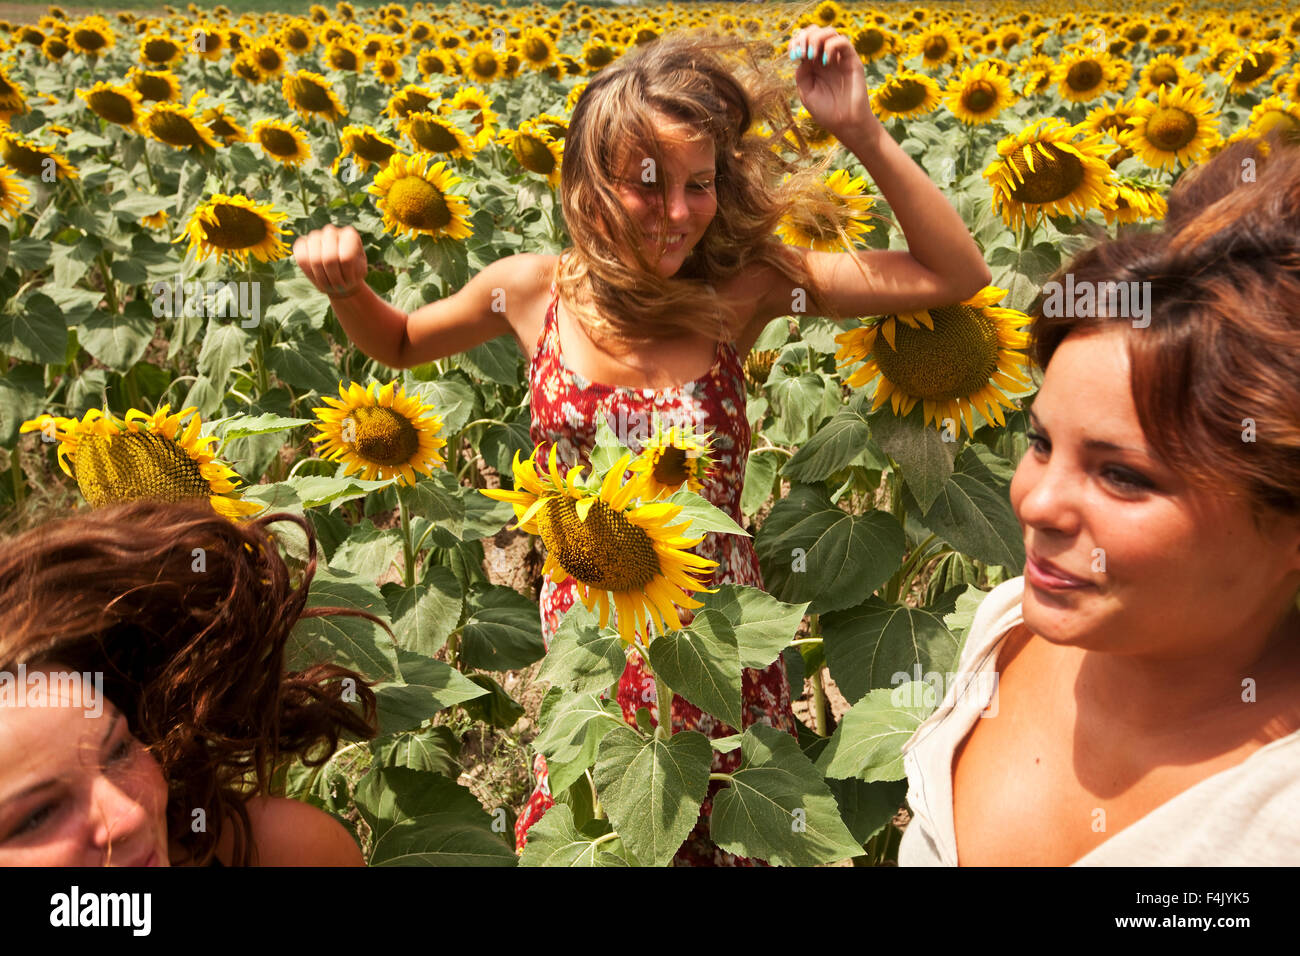 Teenage girls having fun in sunflower field Stock Photo